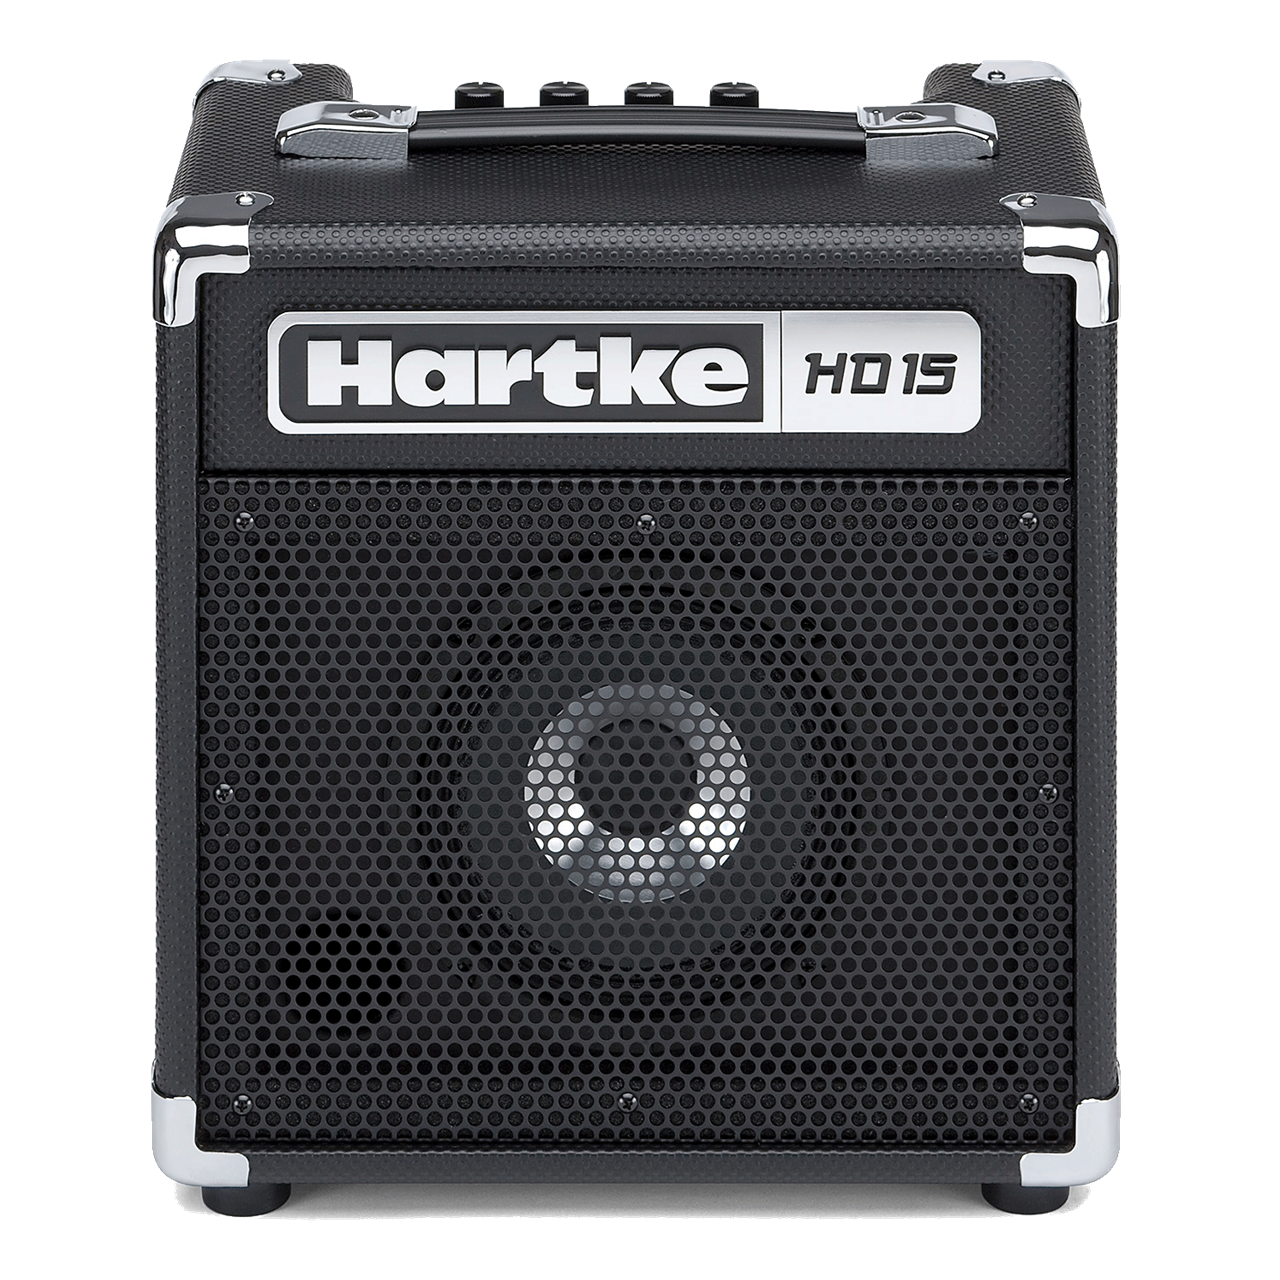 Hartke HD15 Basscombo